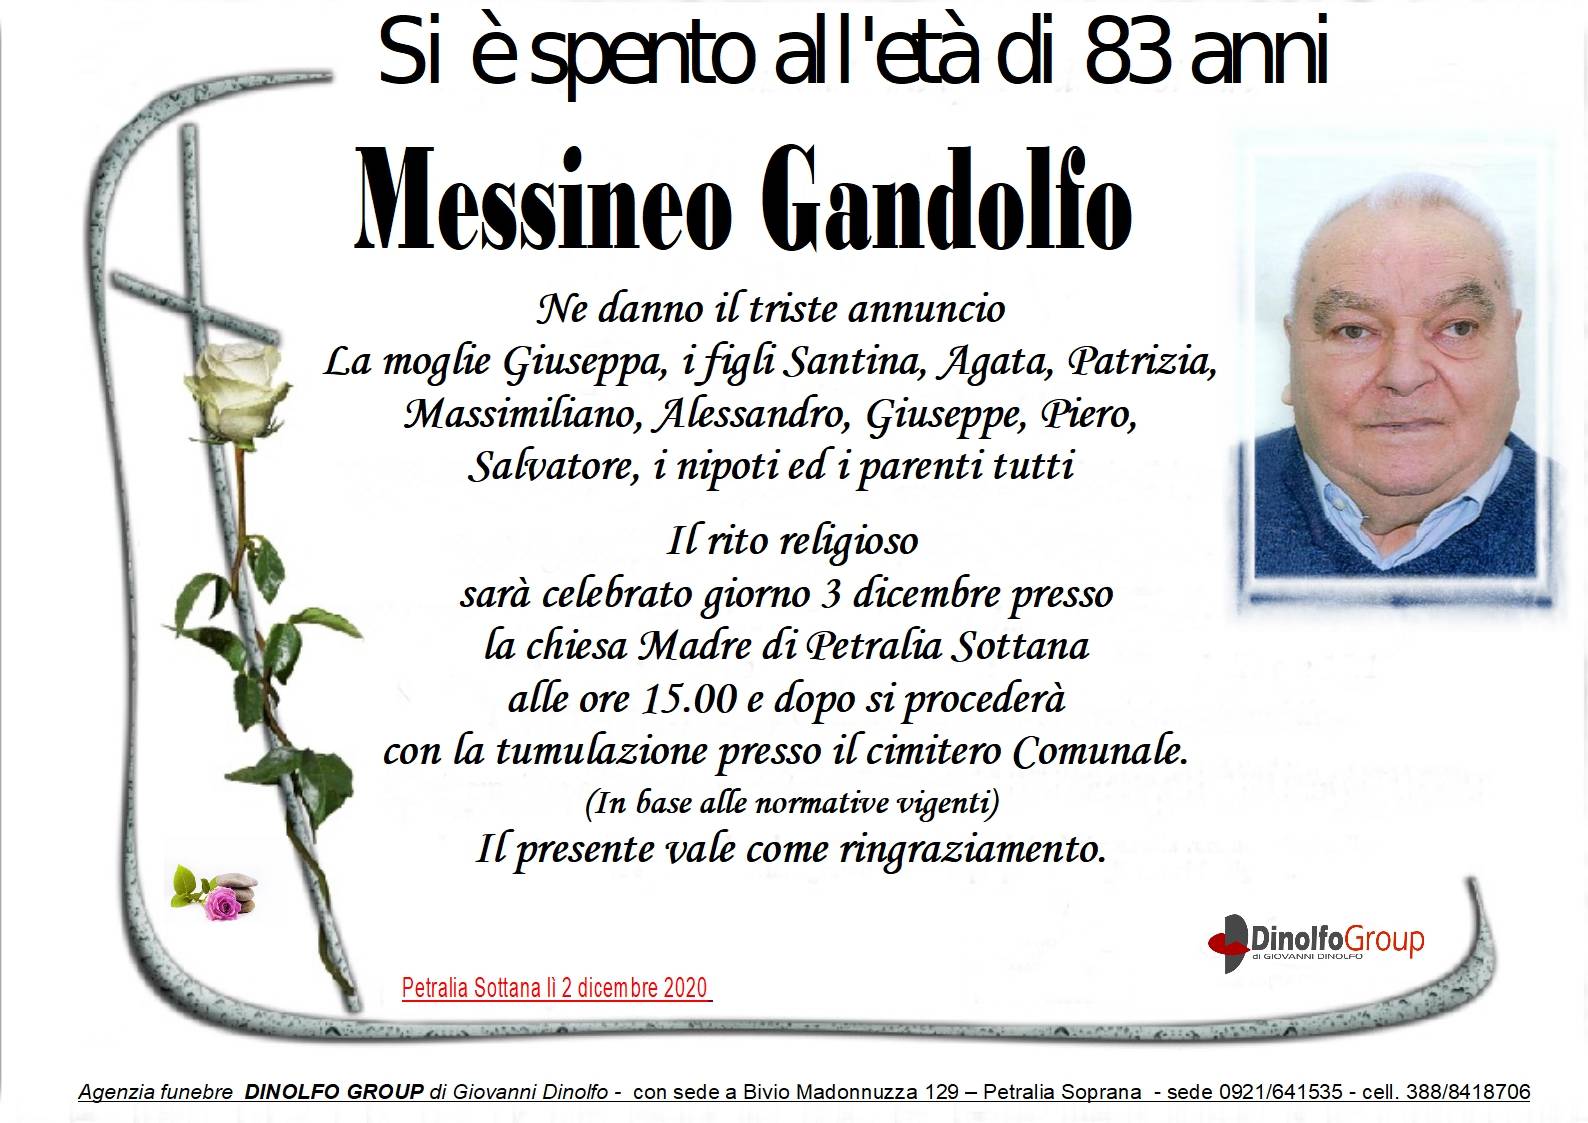 Gandolfo Messineo